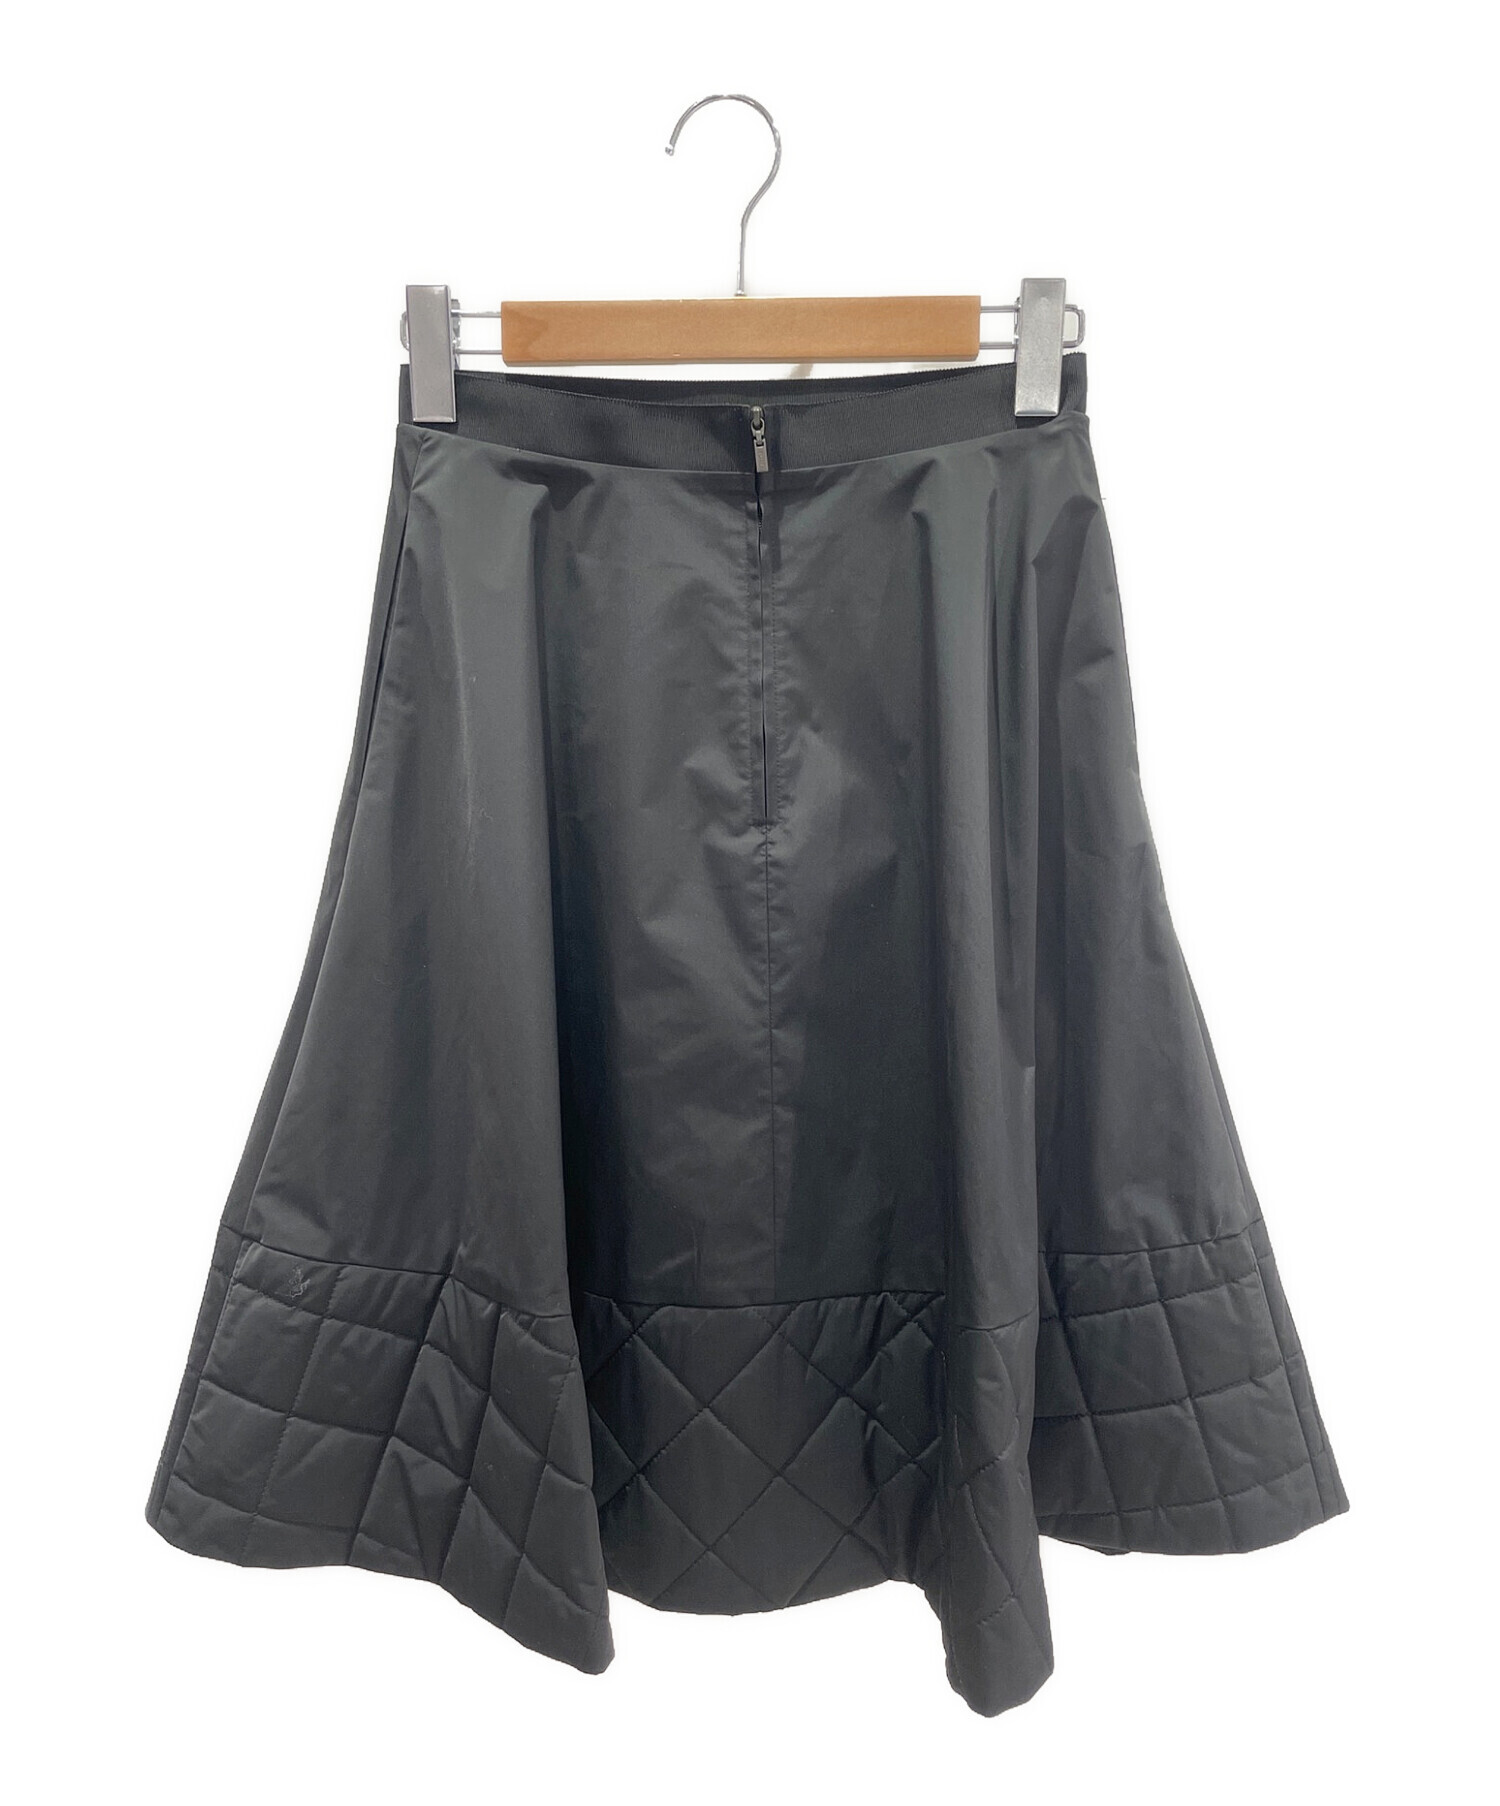 FOXEY NEWYORK (フォクシーニューヨーク) フレア裾キルティングスカート ブラック サイズ:38